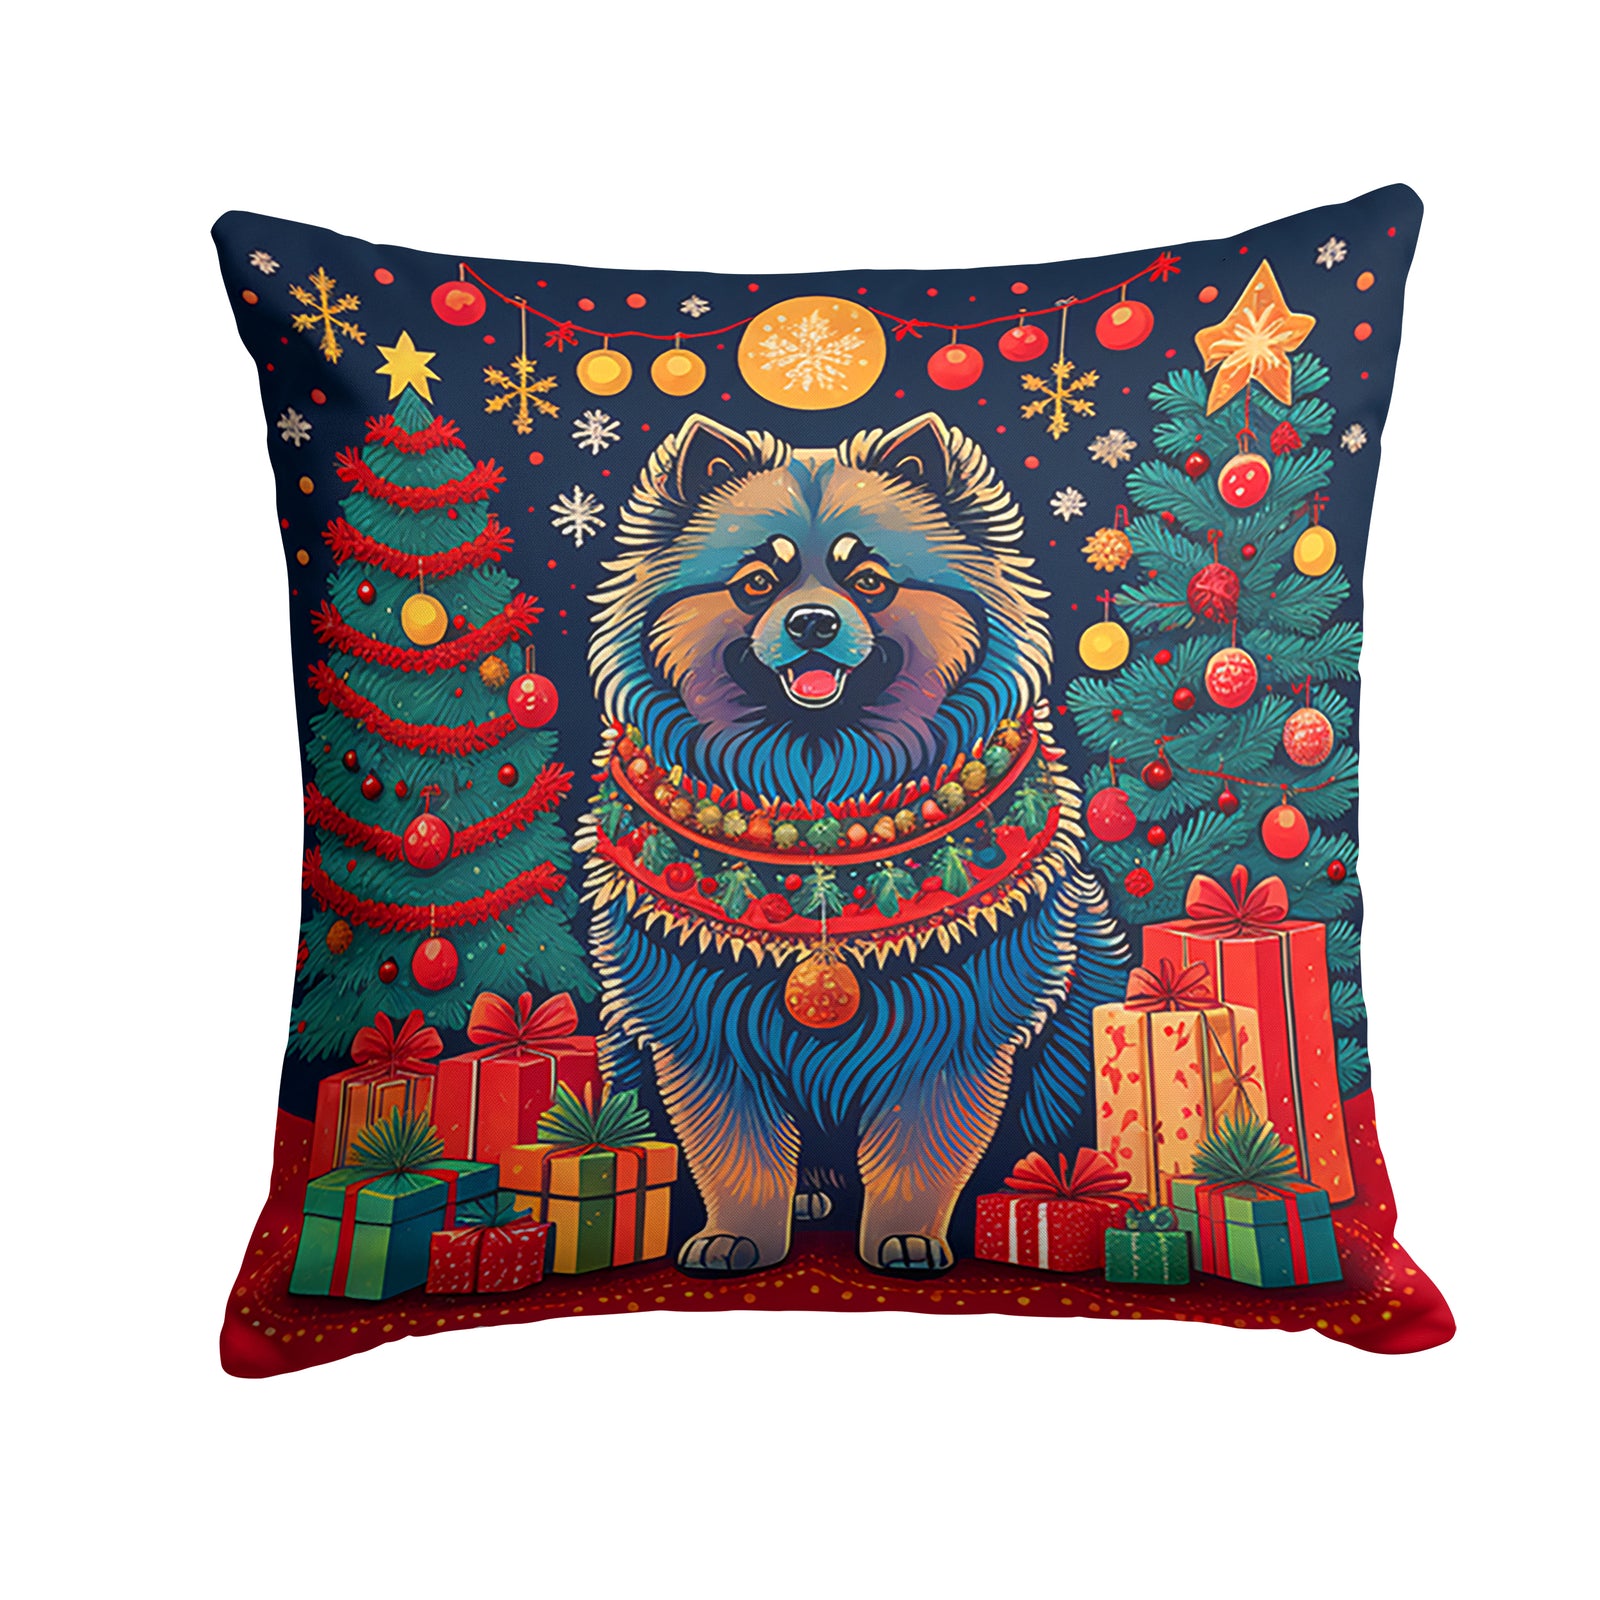 Buy this Keeshond Christmas Fabric Decorative Pillow